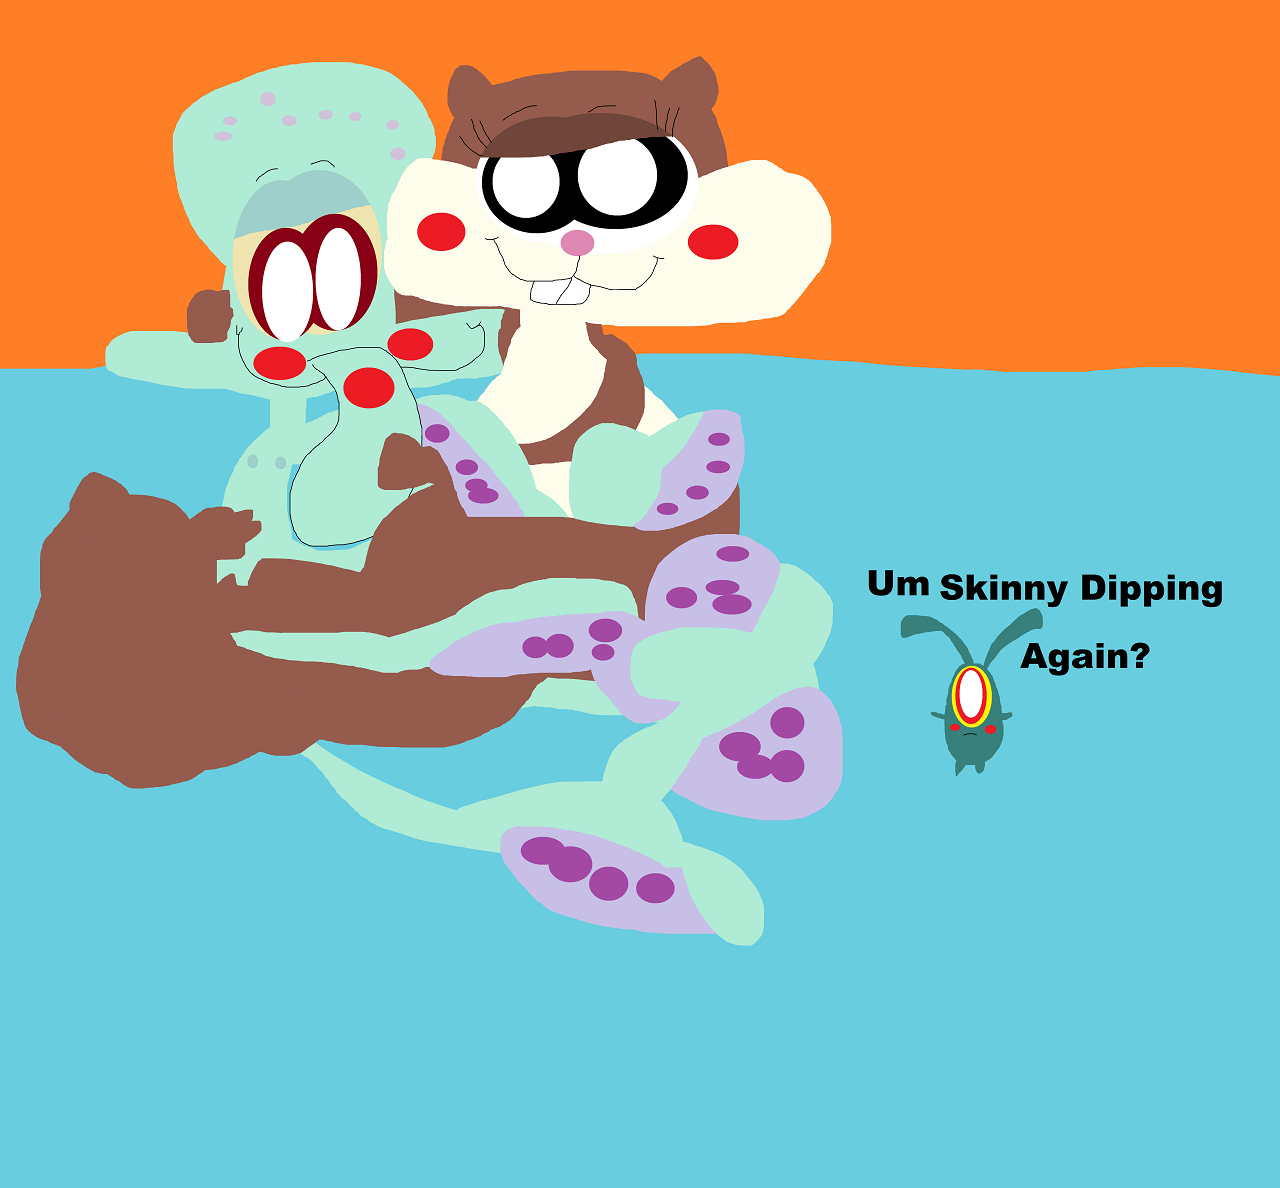 Um Skinny Dipping Again by Falconlobo